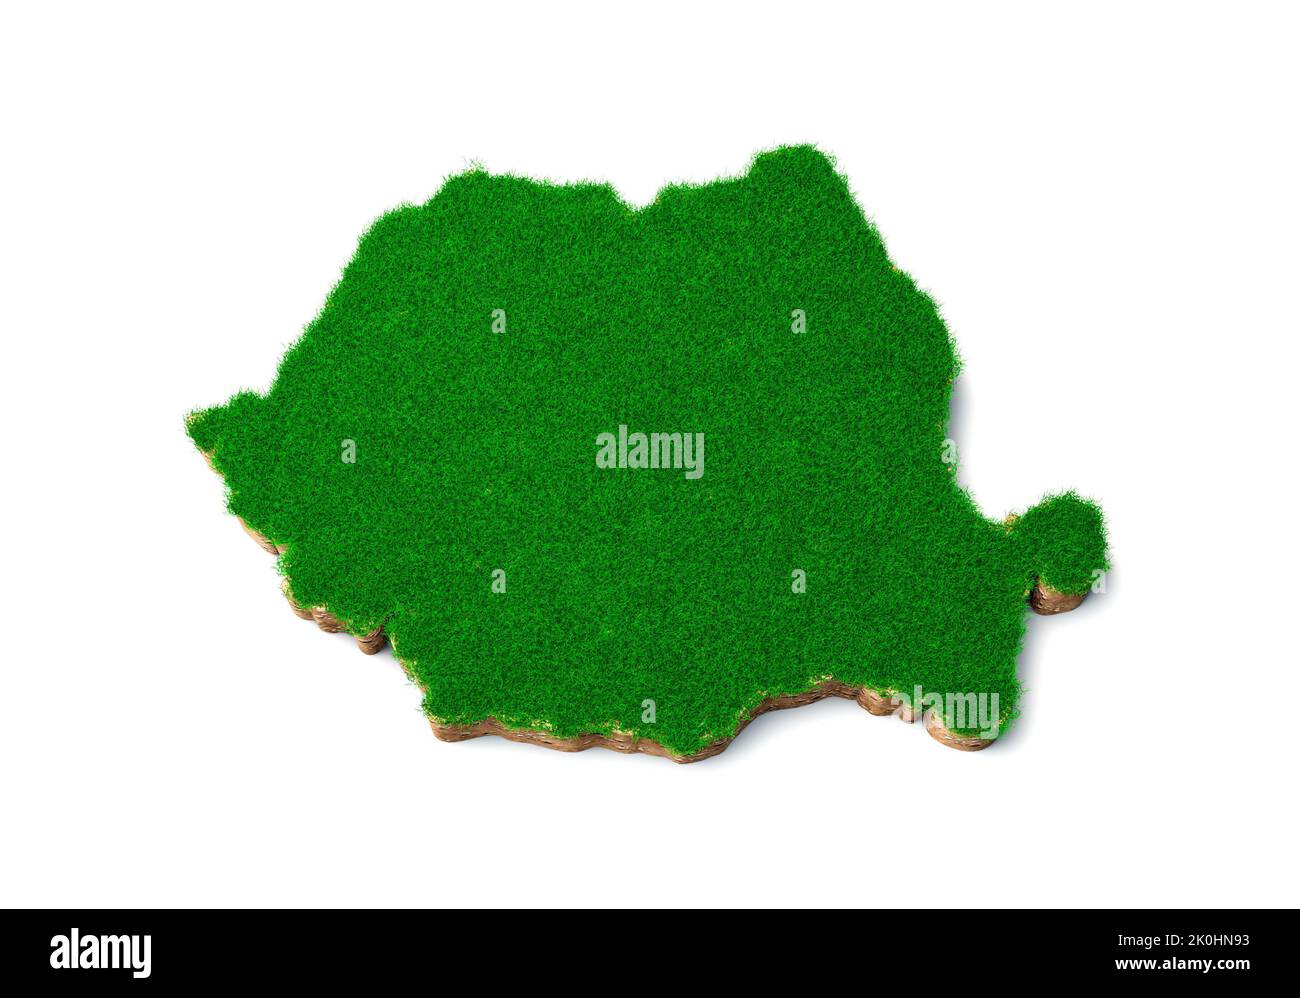 A 3D illustration of the Romania Map stock photos Stock Photo